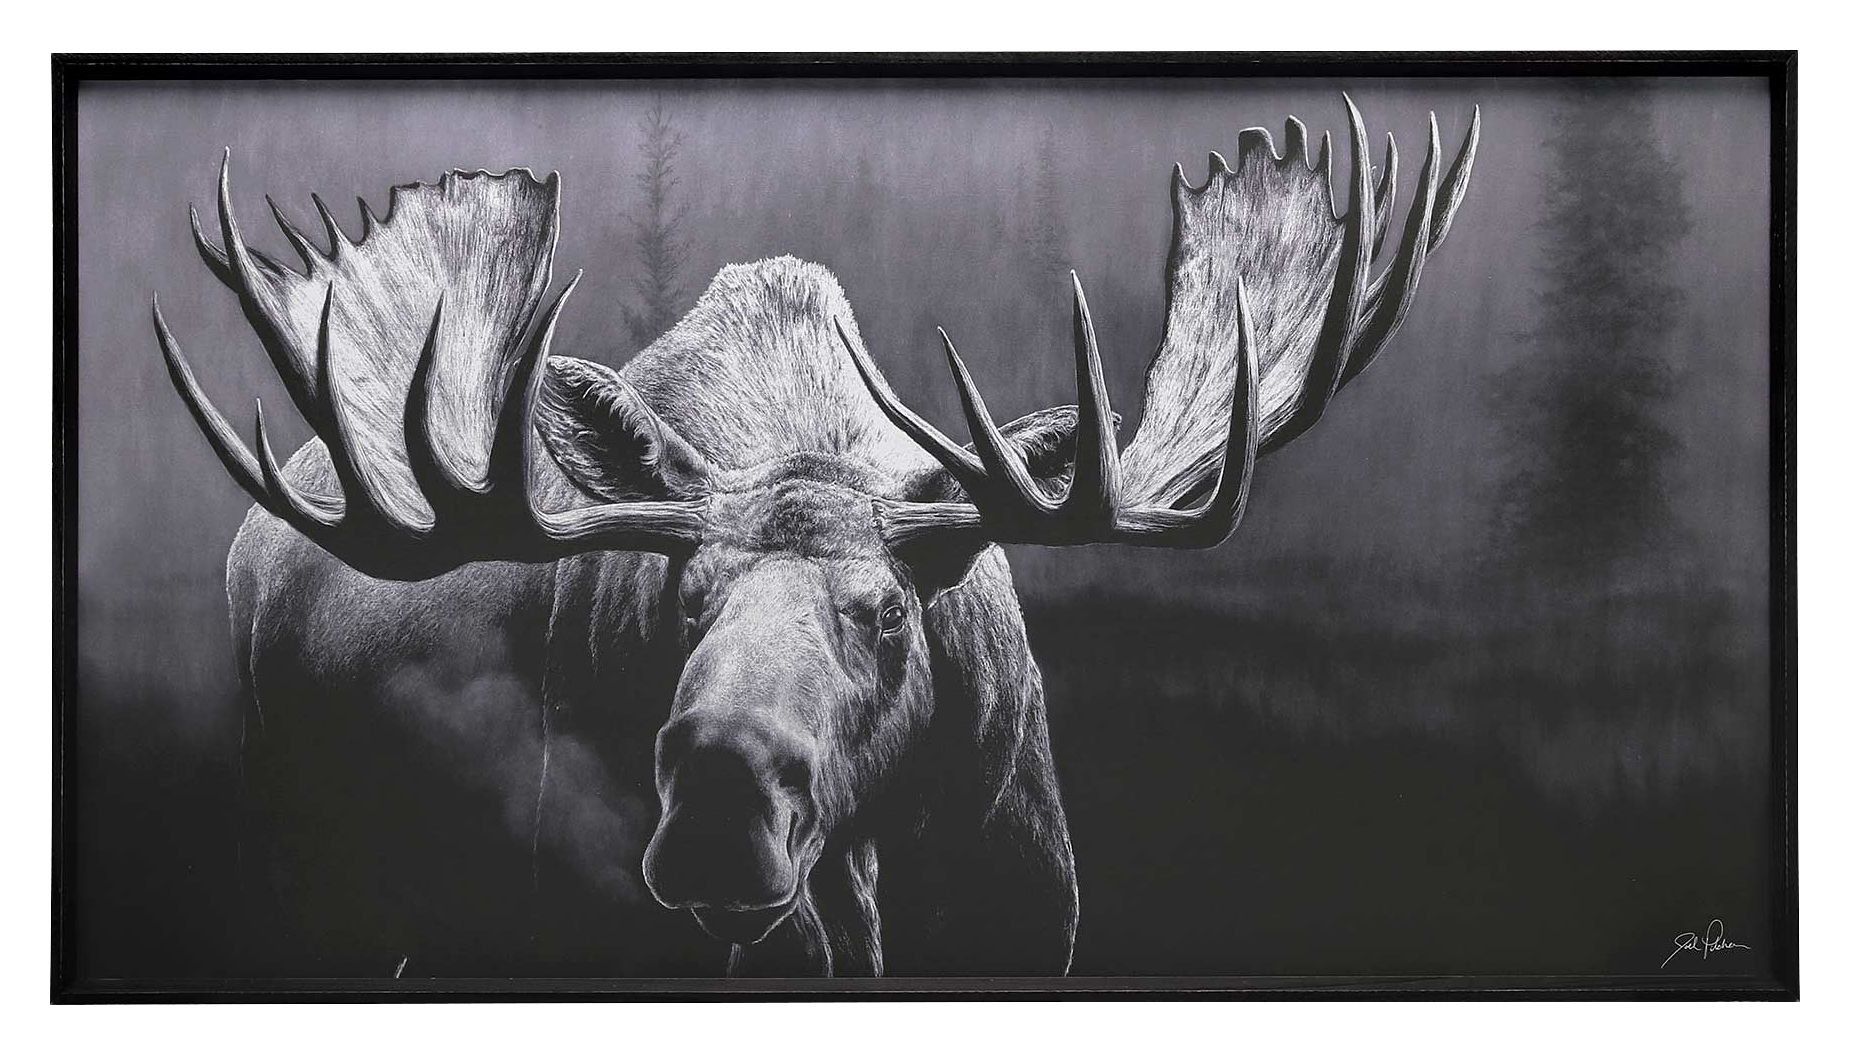 Horizon Black Moving Sand Art – Moose Mountain Trading Co.